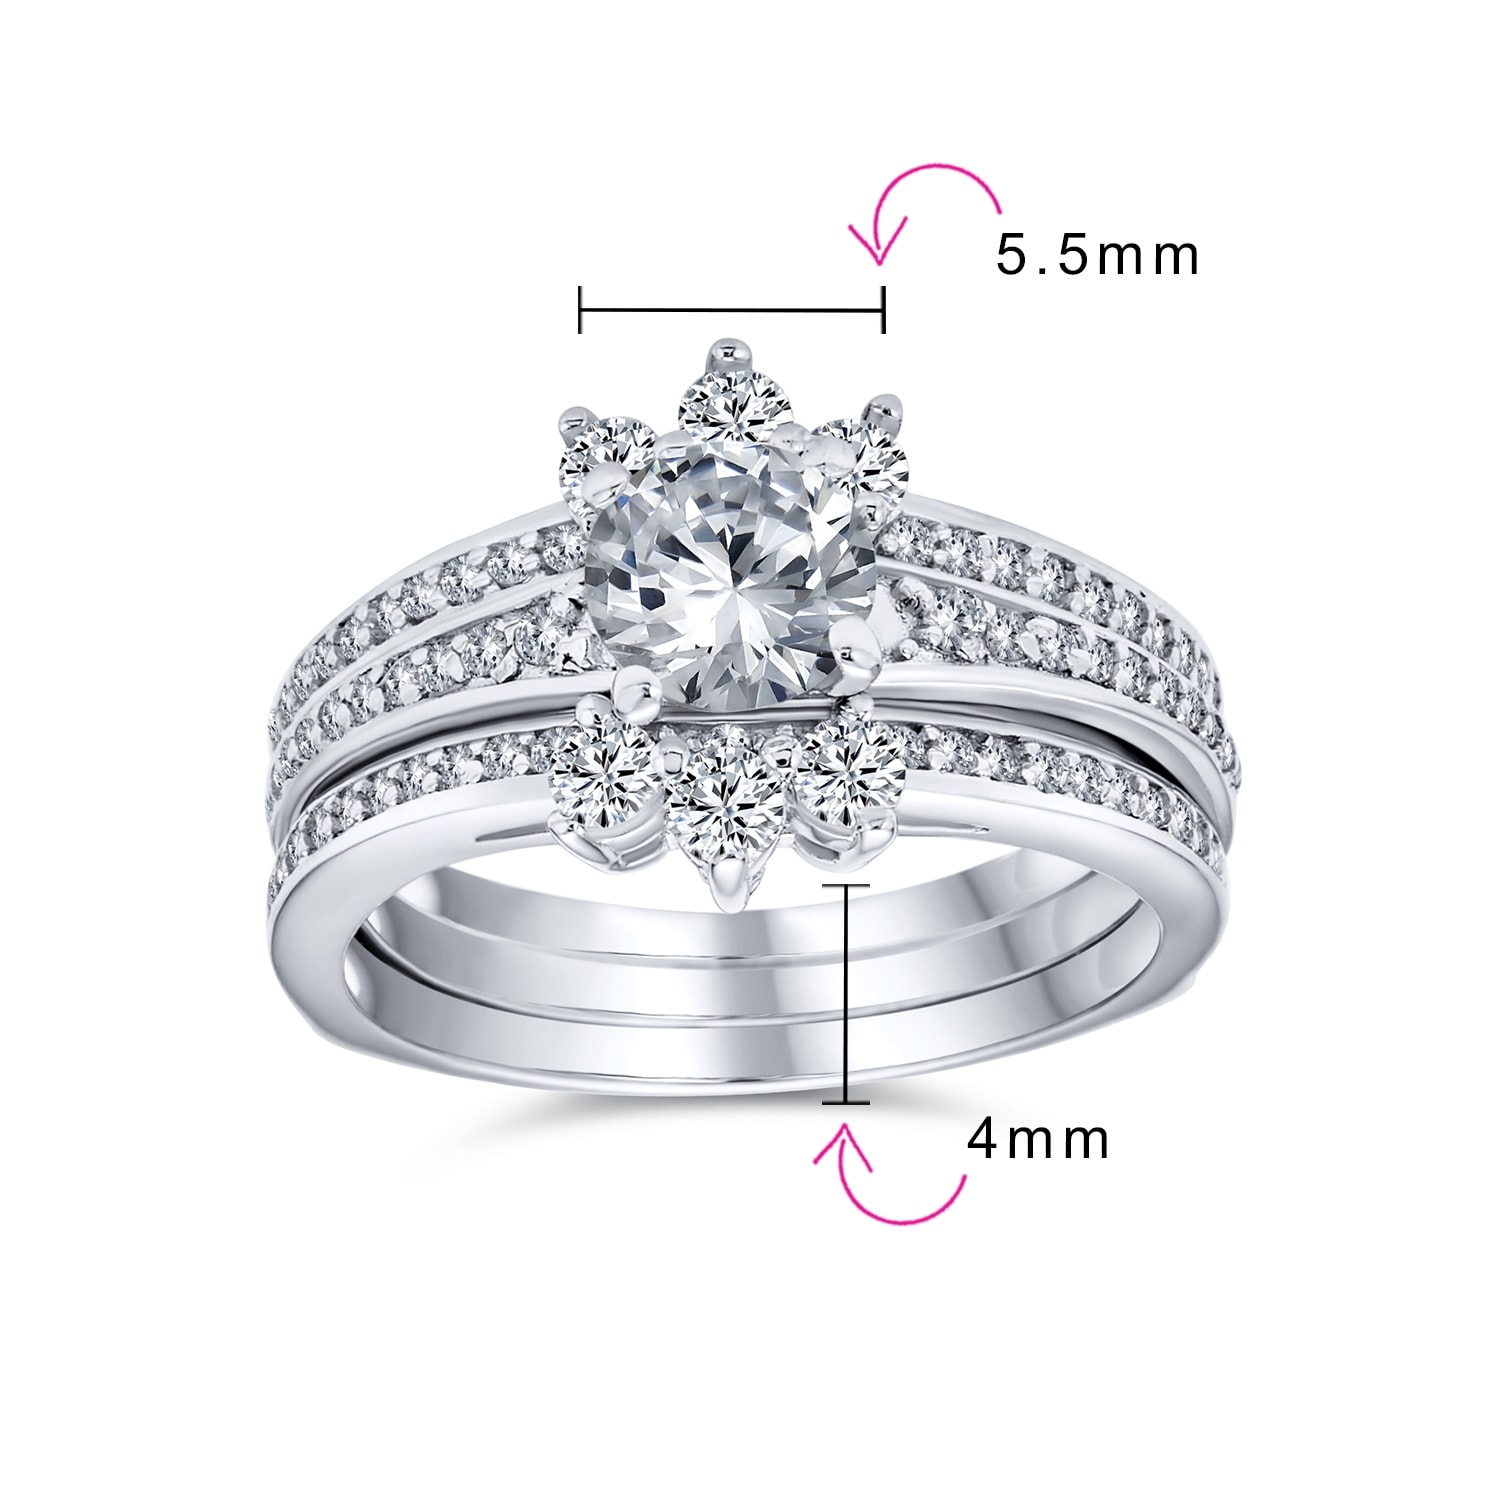 Wuziwen 5mm Wedding Band Eternity Ring for Women Engagement Bridal Sterling Silver White Cz